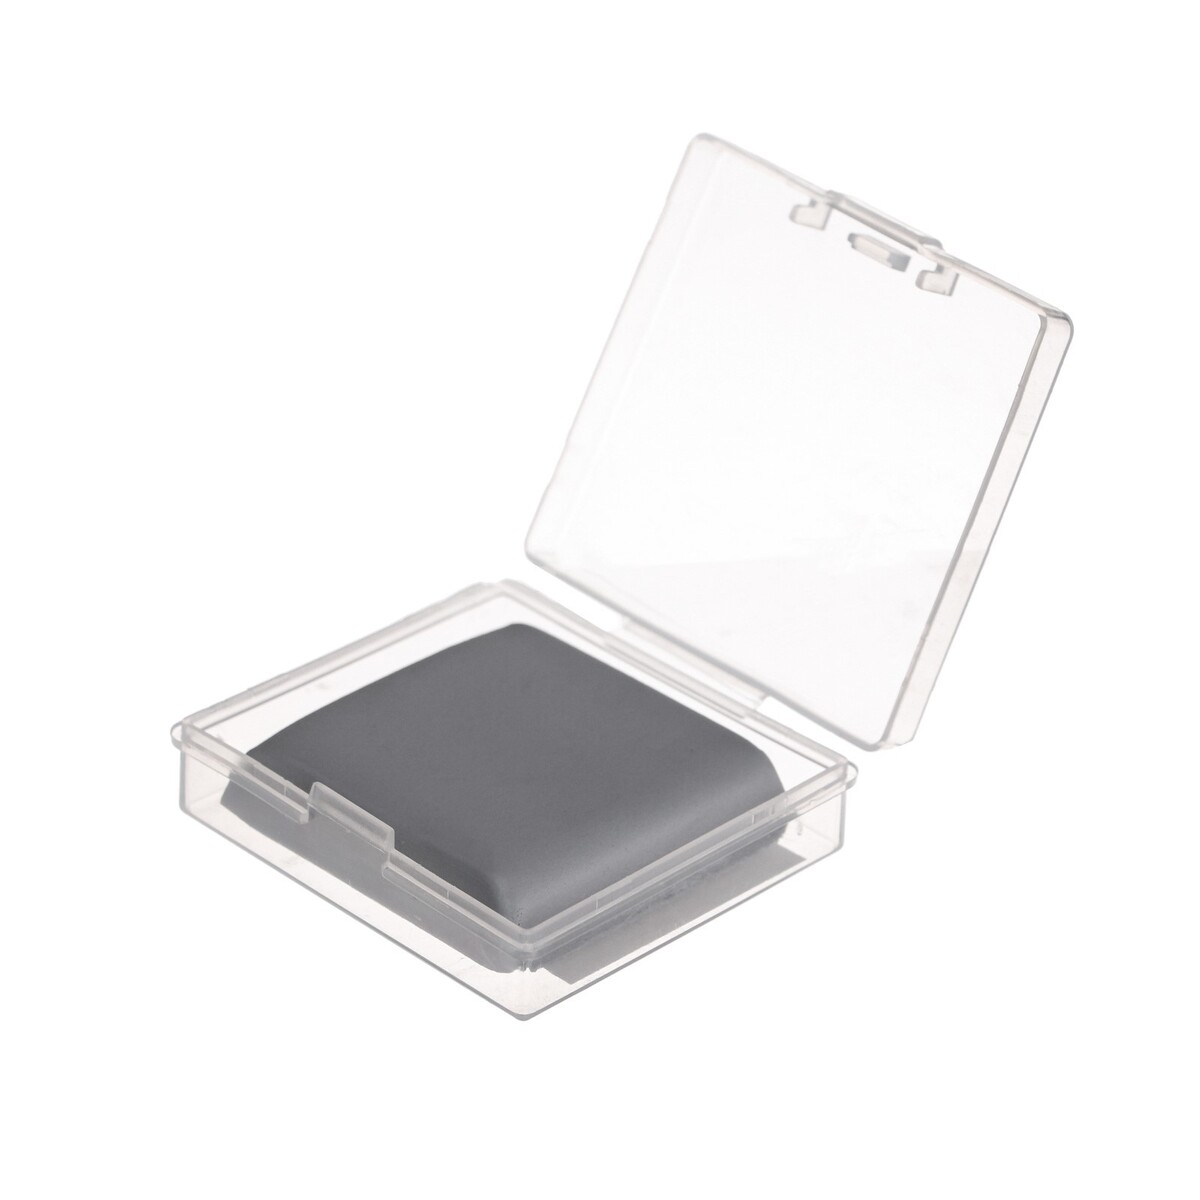 Ластик клячка прямоугольный серый, размер 37 х 35 х 0,9 мм, в коробочке ластик hybrid двух ный